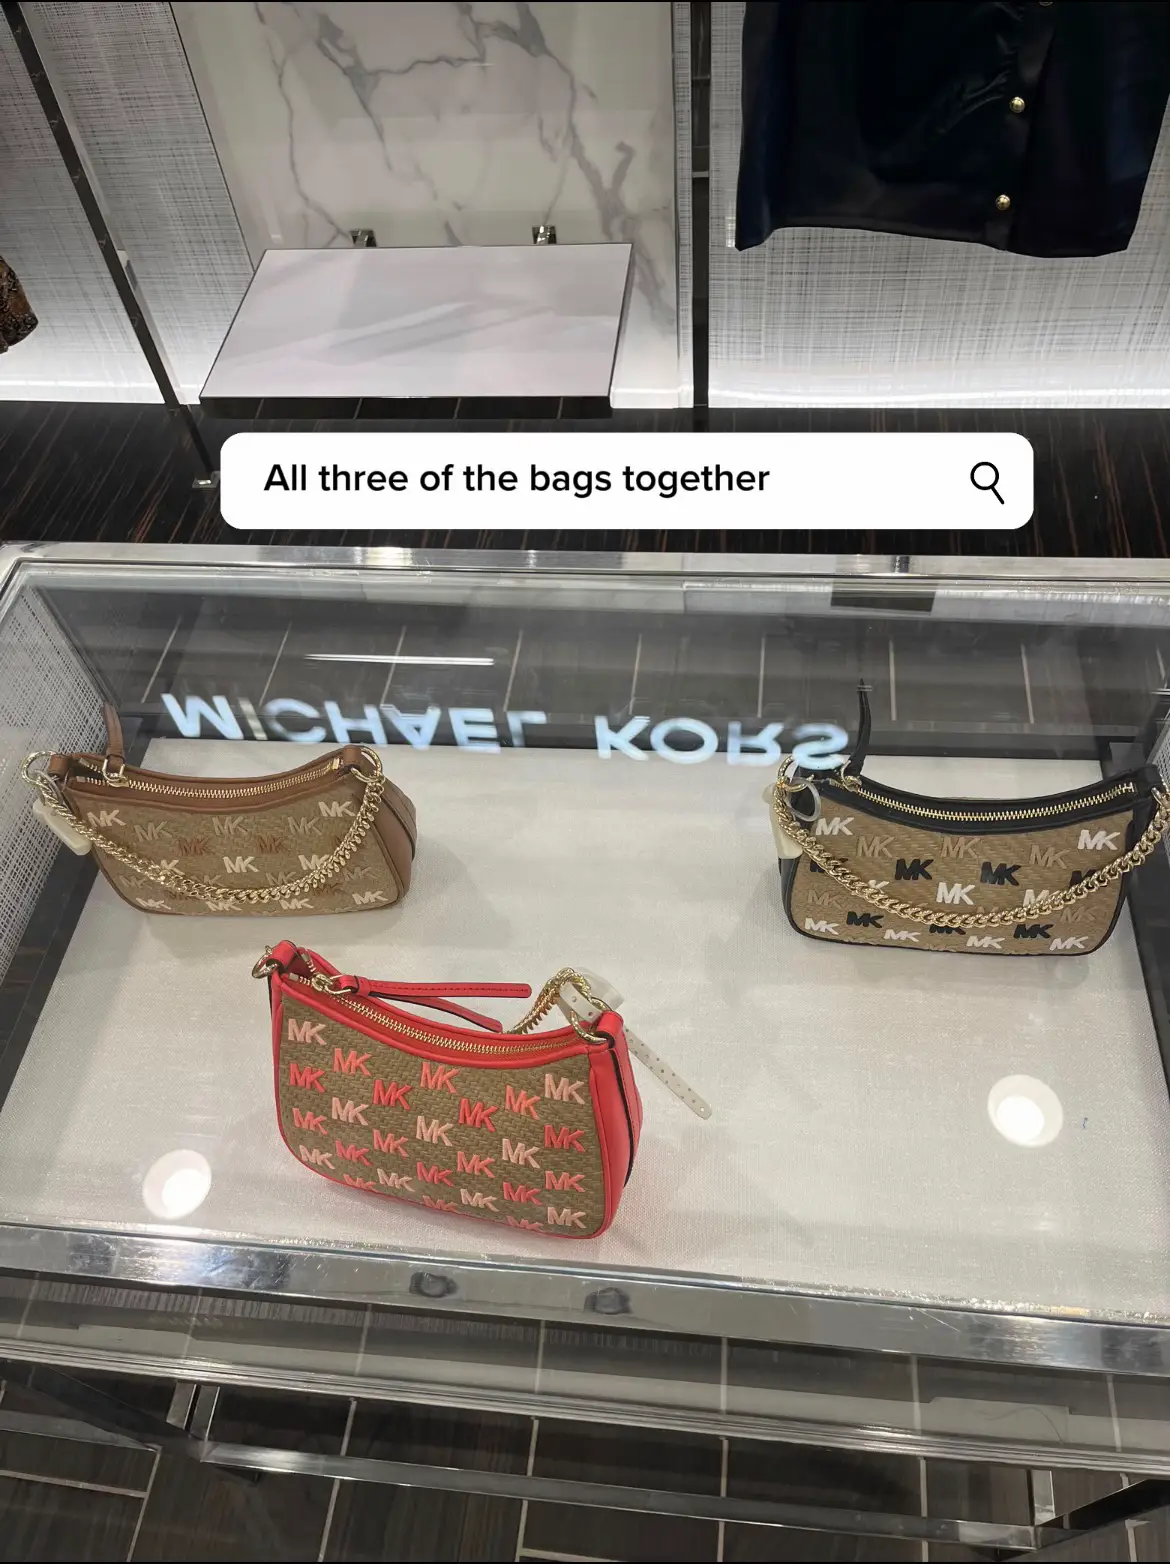 Are the designer handbags and backpacks, like Michael Kors and